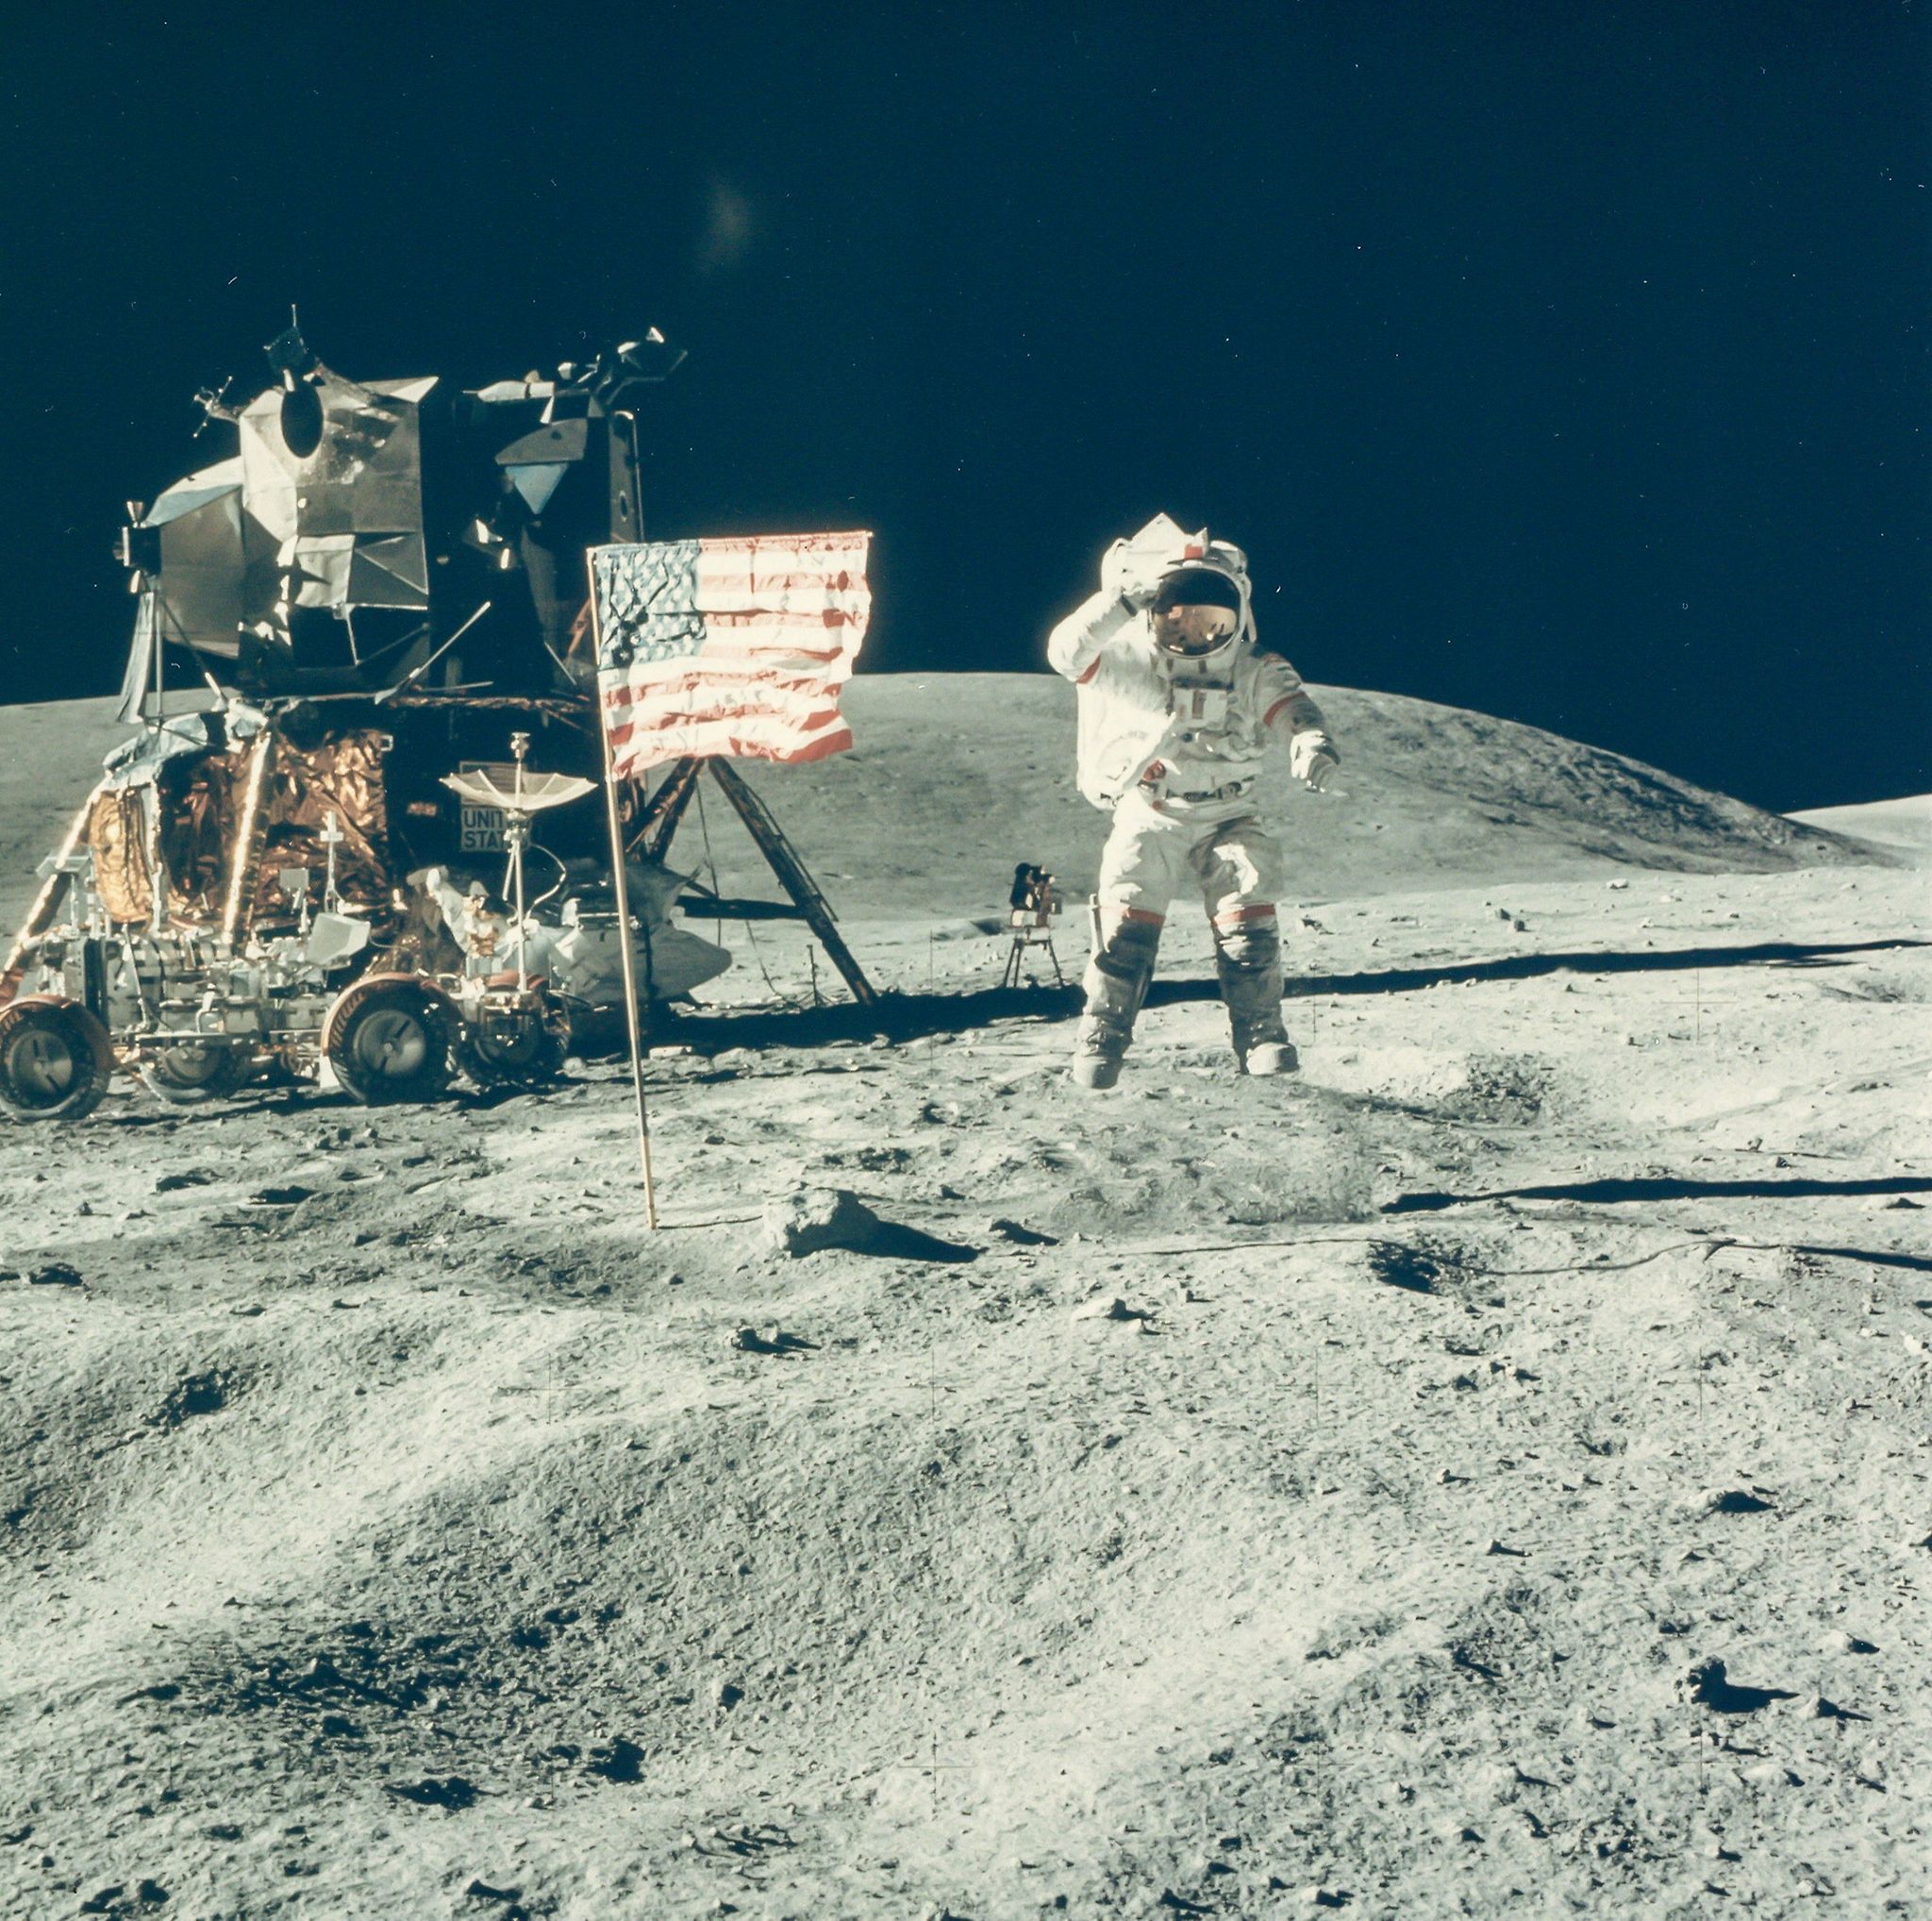 Charles Duke - John Young jumps and salutes the flag, EVA 1, Apollo 16, April 1972 Vintage